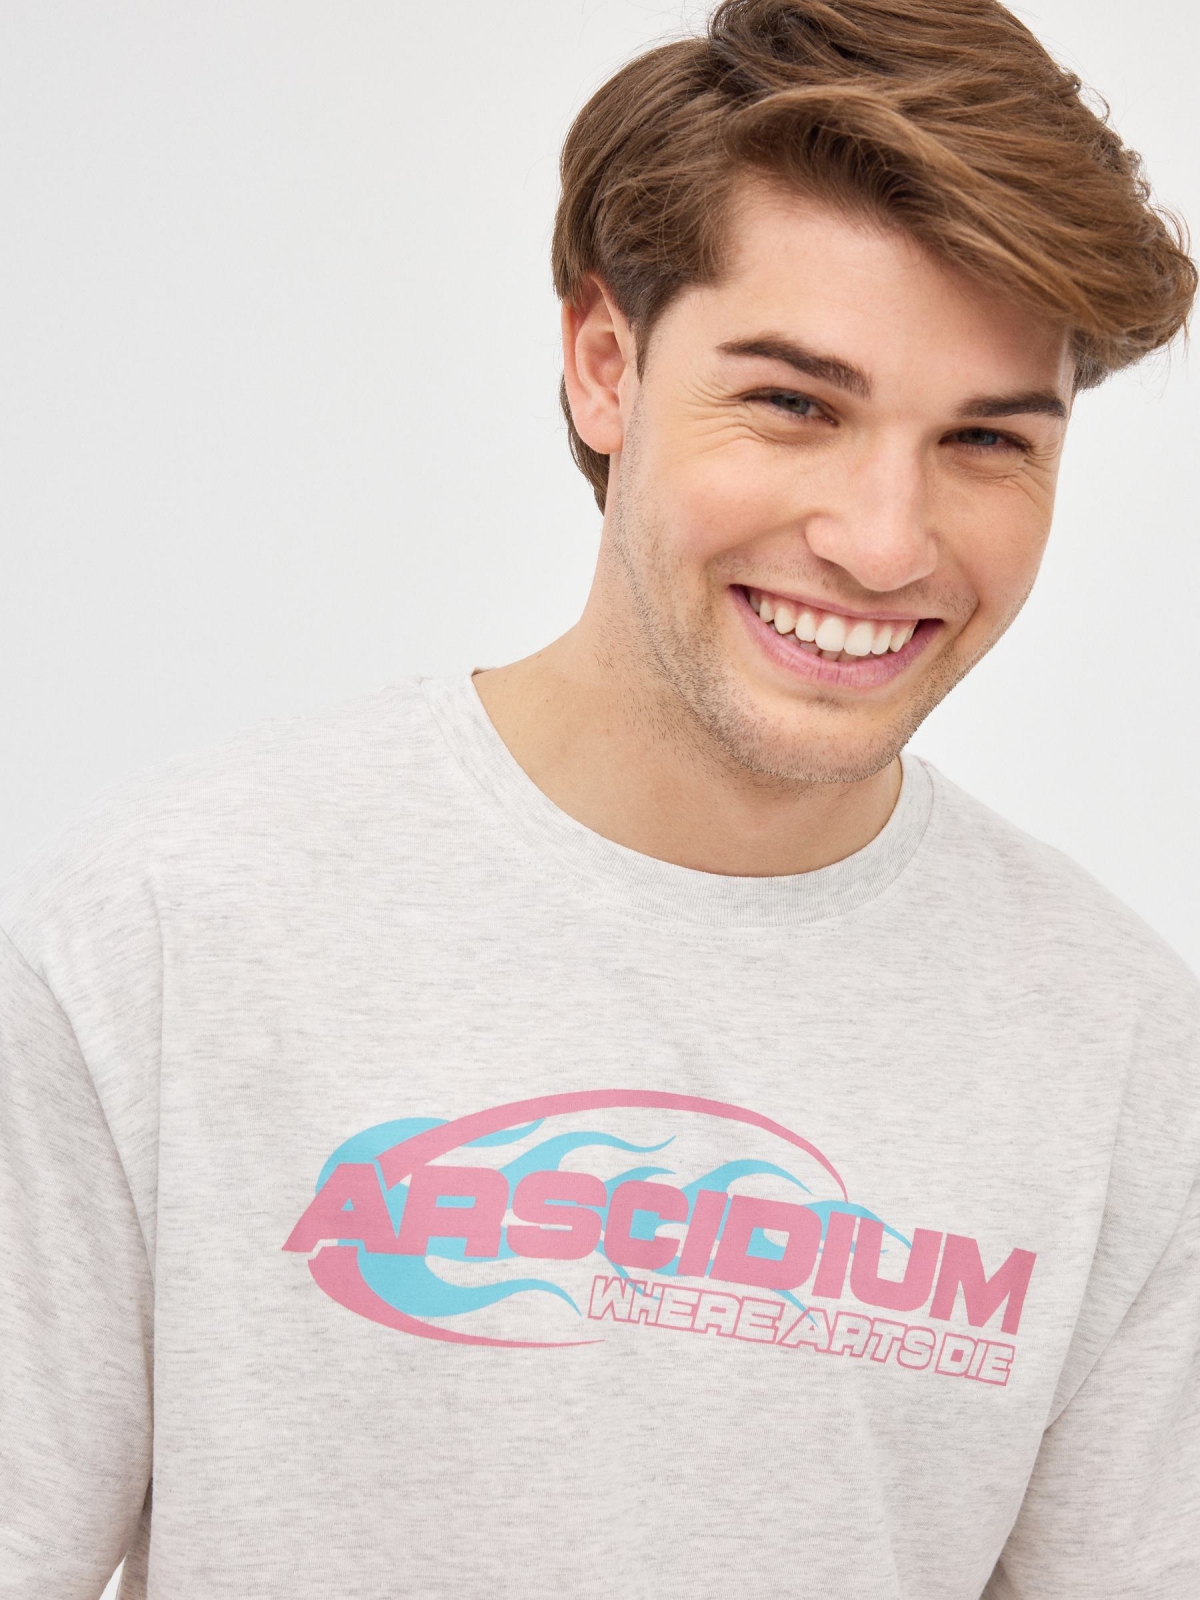 T-shirt Arscidium grey foreground